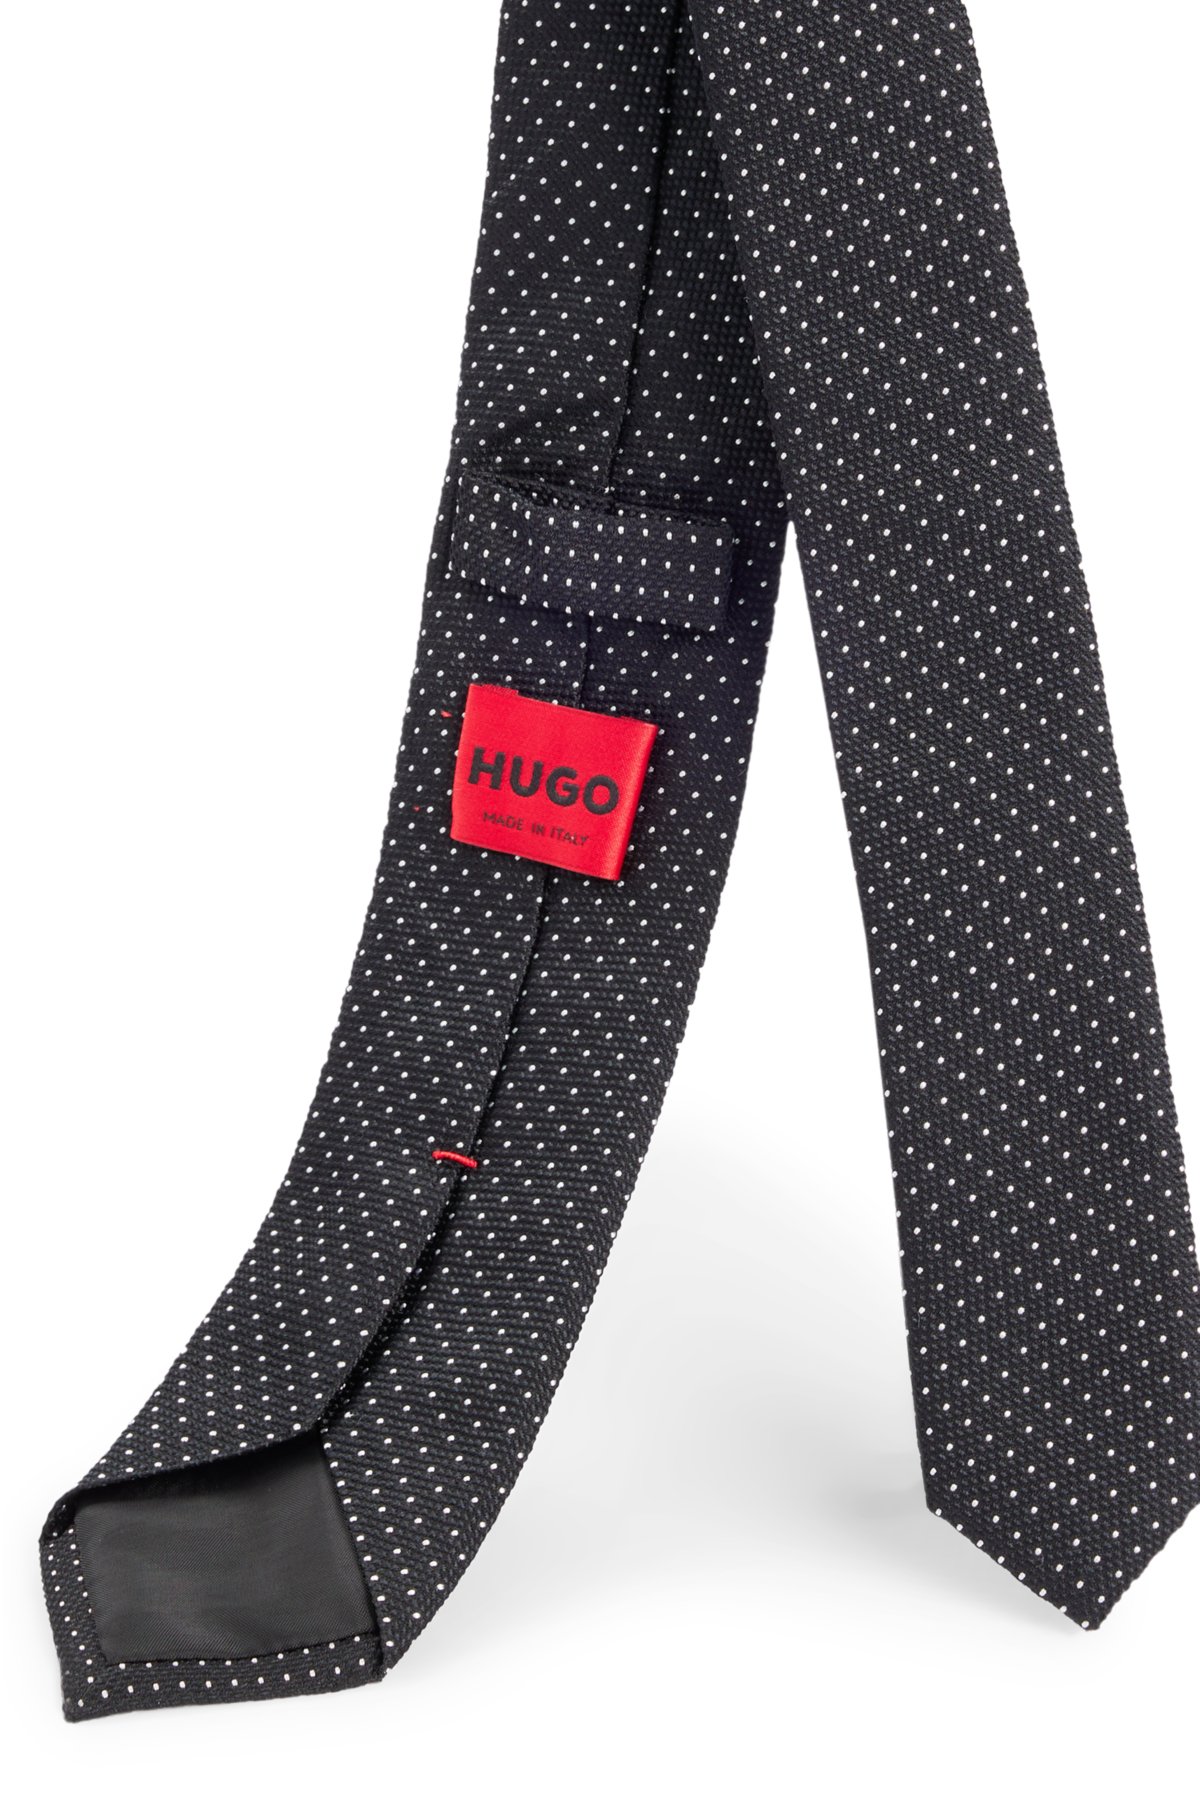 HUGO - Krawatte reiner Seide aus mit Jacquard-Muster